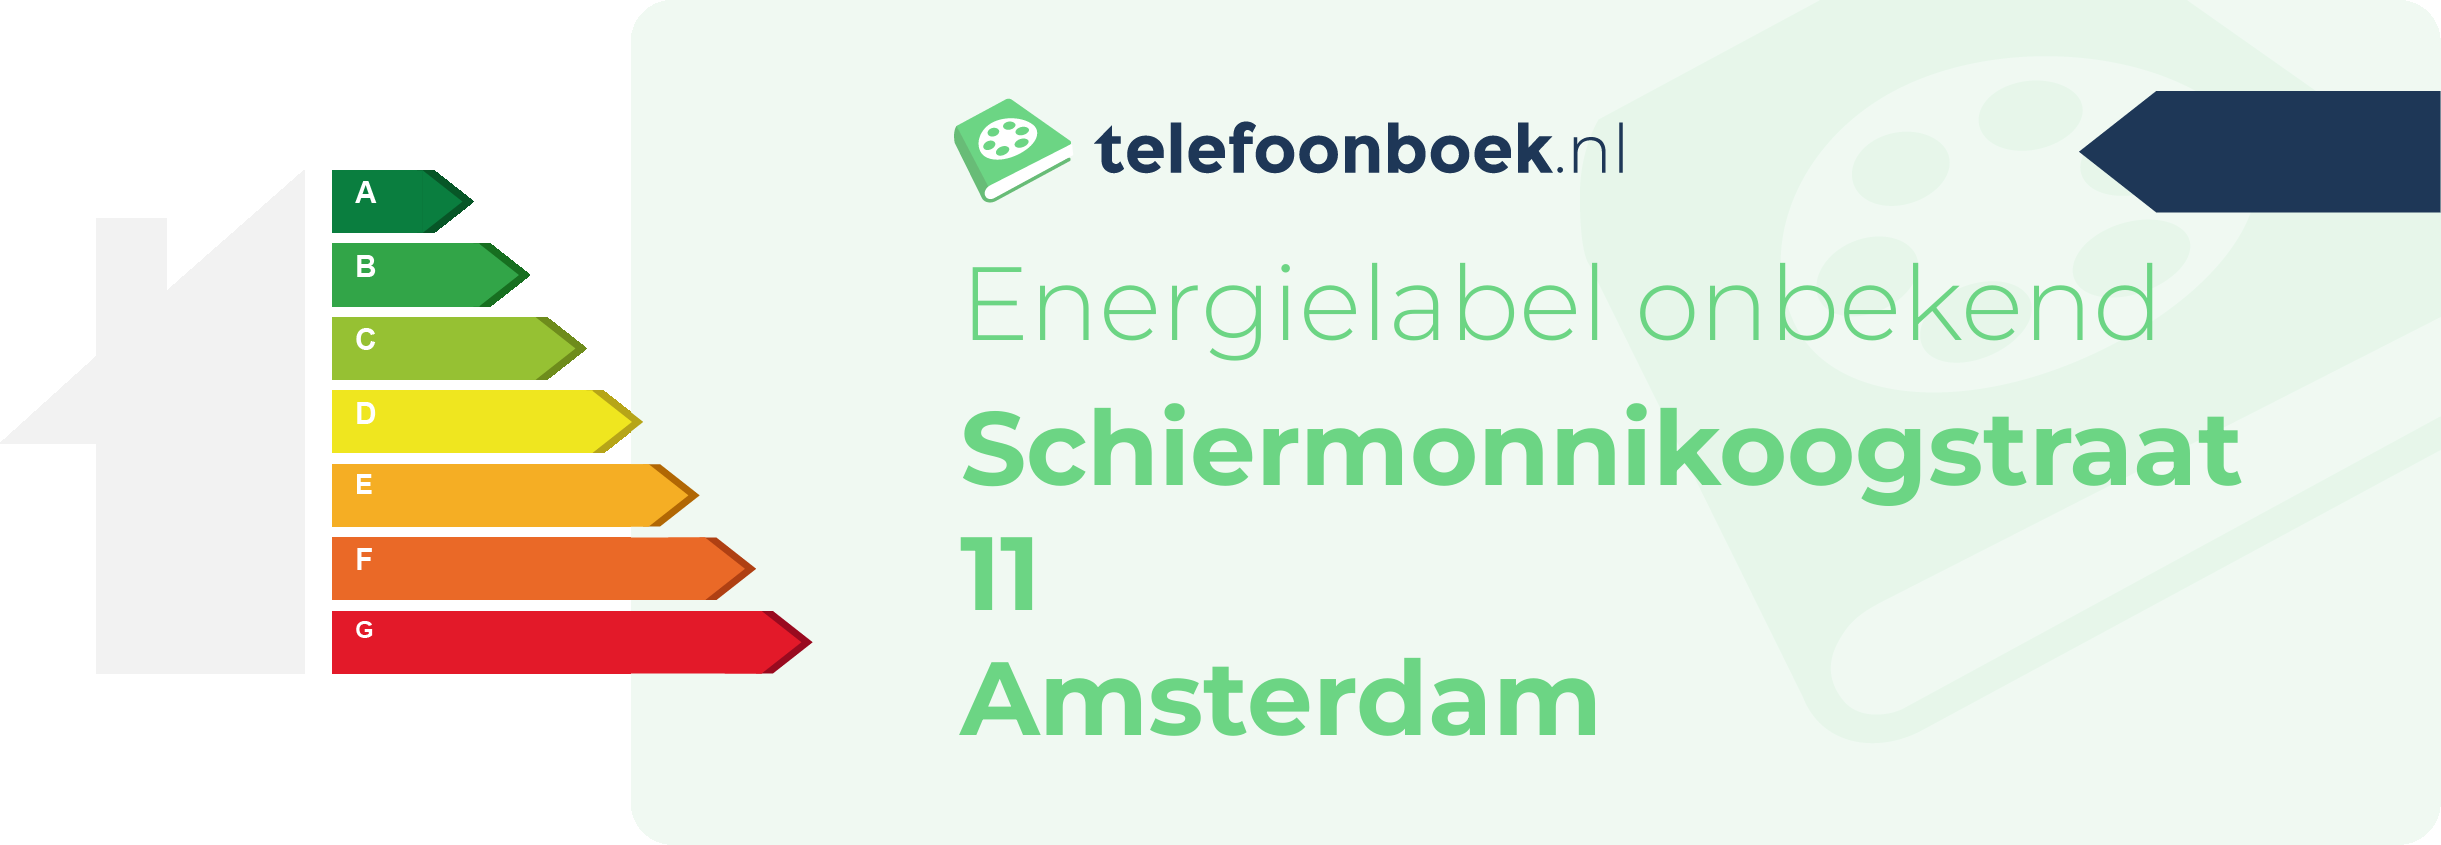 Energielabel Schiermonnikoogstraat 11 Amsterdam